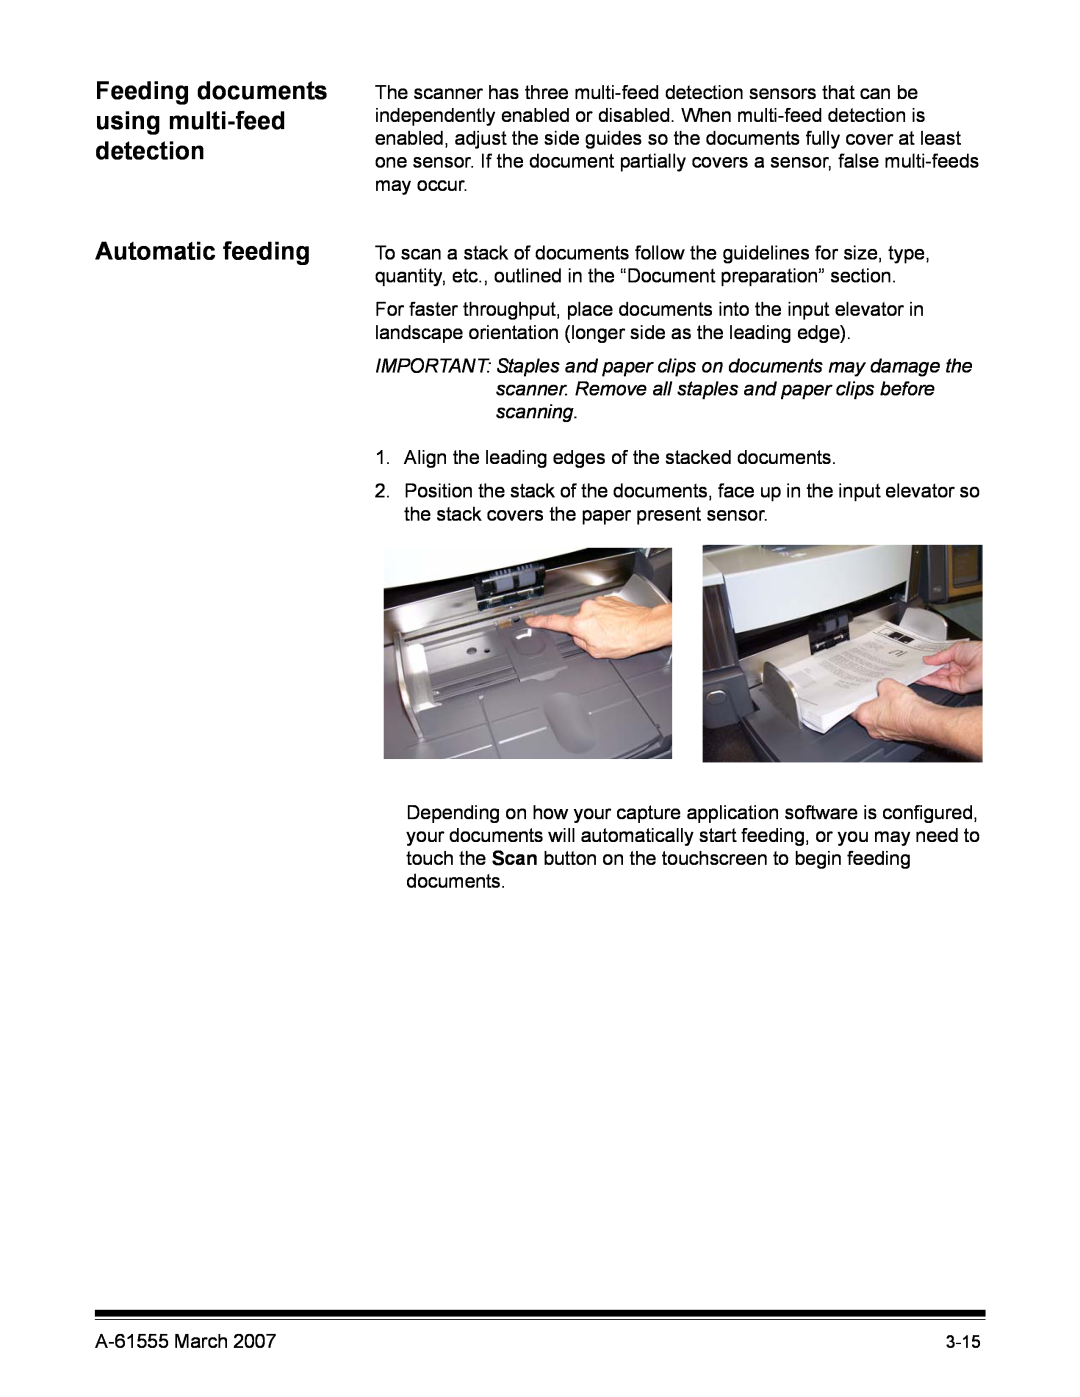 Kodak i1800 Series manual Automatic feeding, Feeding documents using multi-feeddetection 